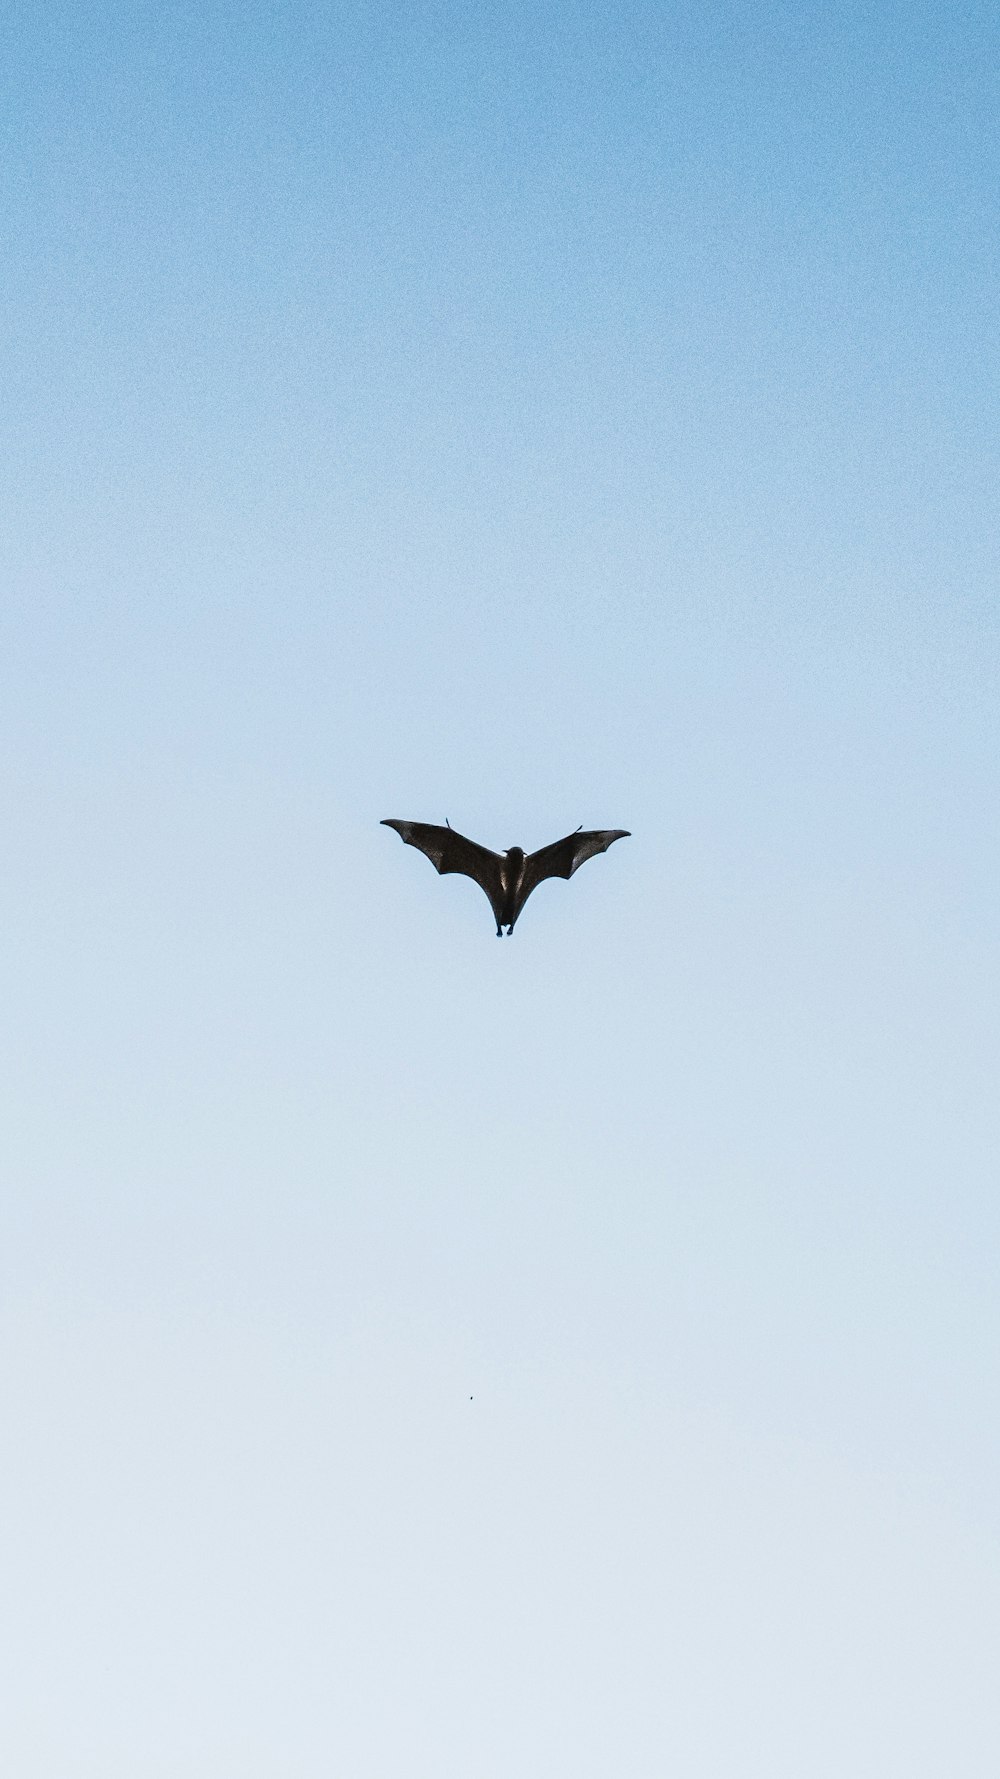 black bird flying under blue sky during daytime